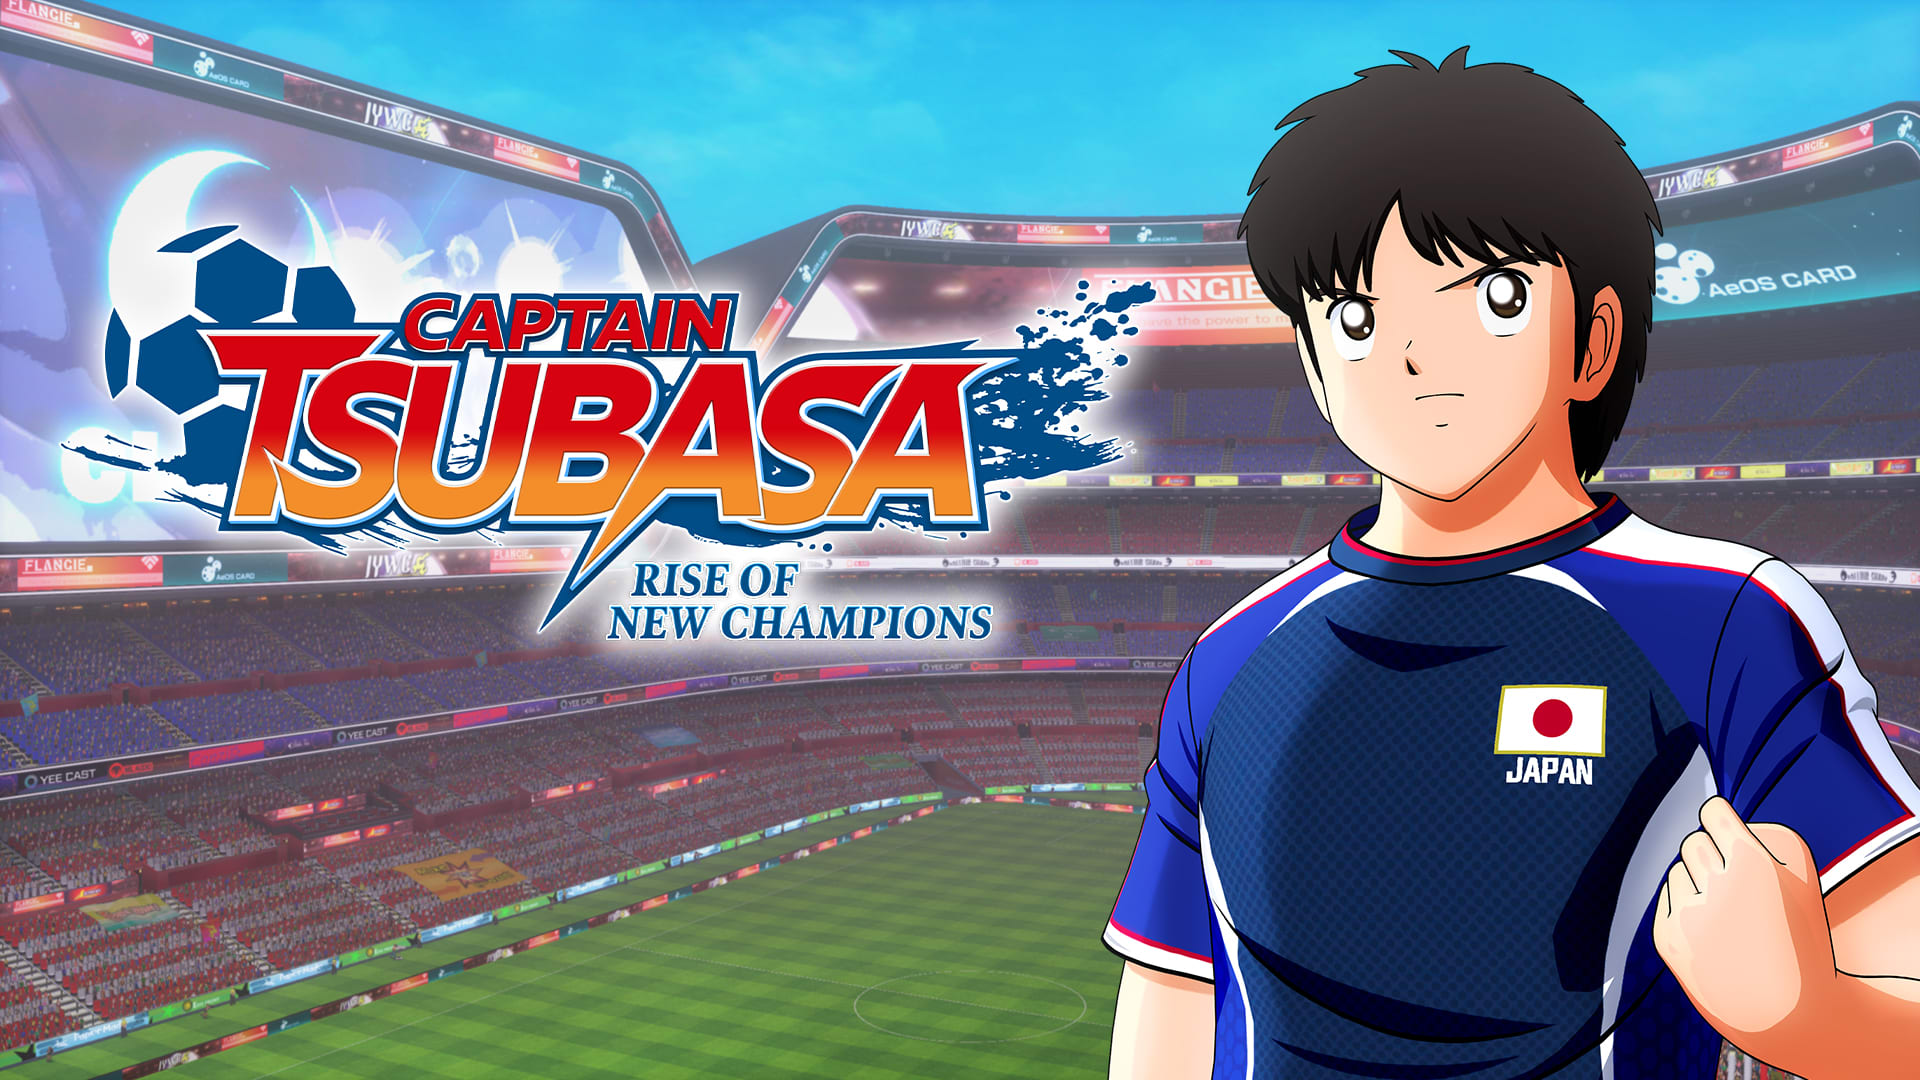 Captain Tsubasa: misión de Taro Misaki en Rise of New Champions